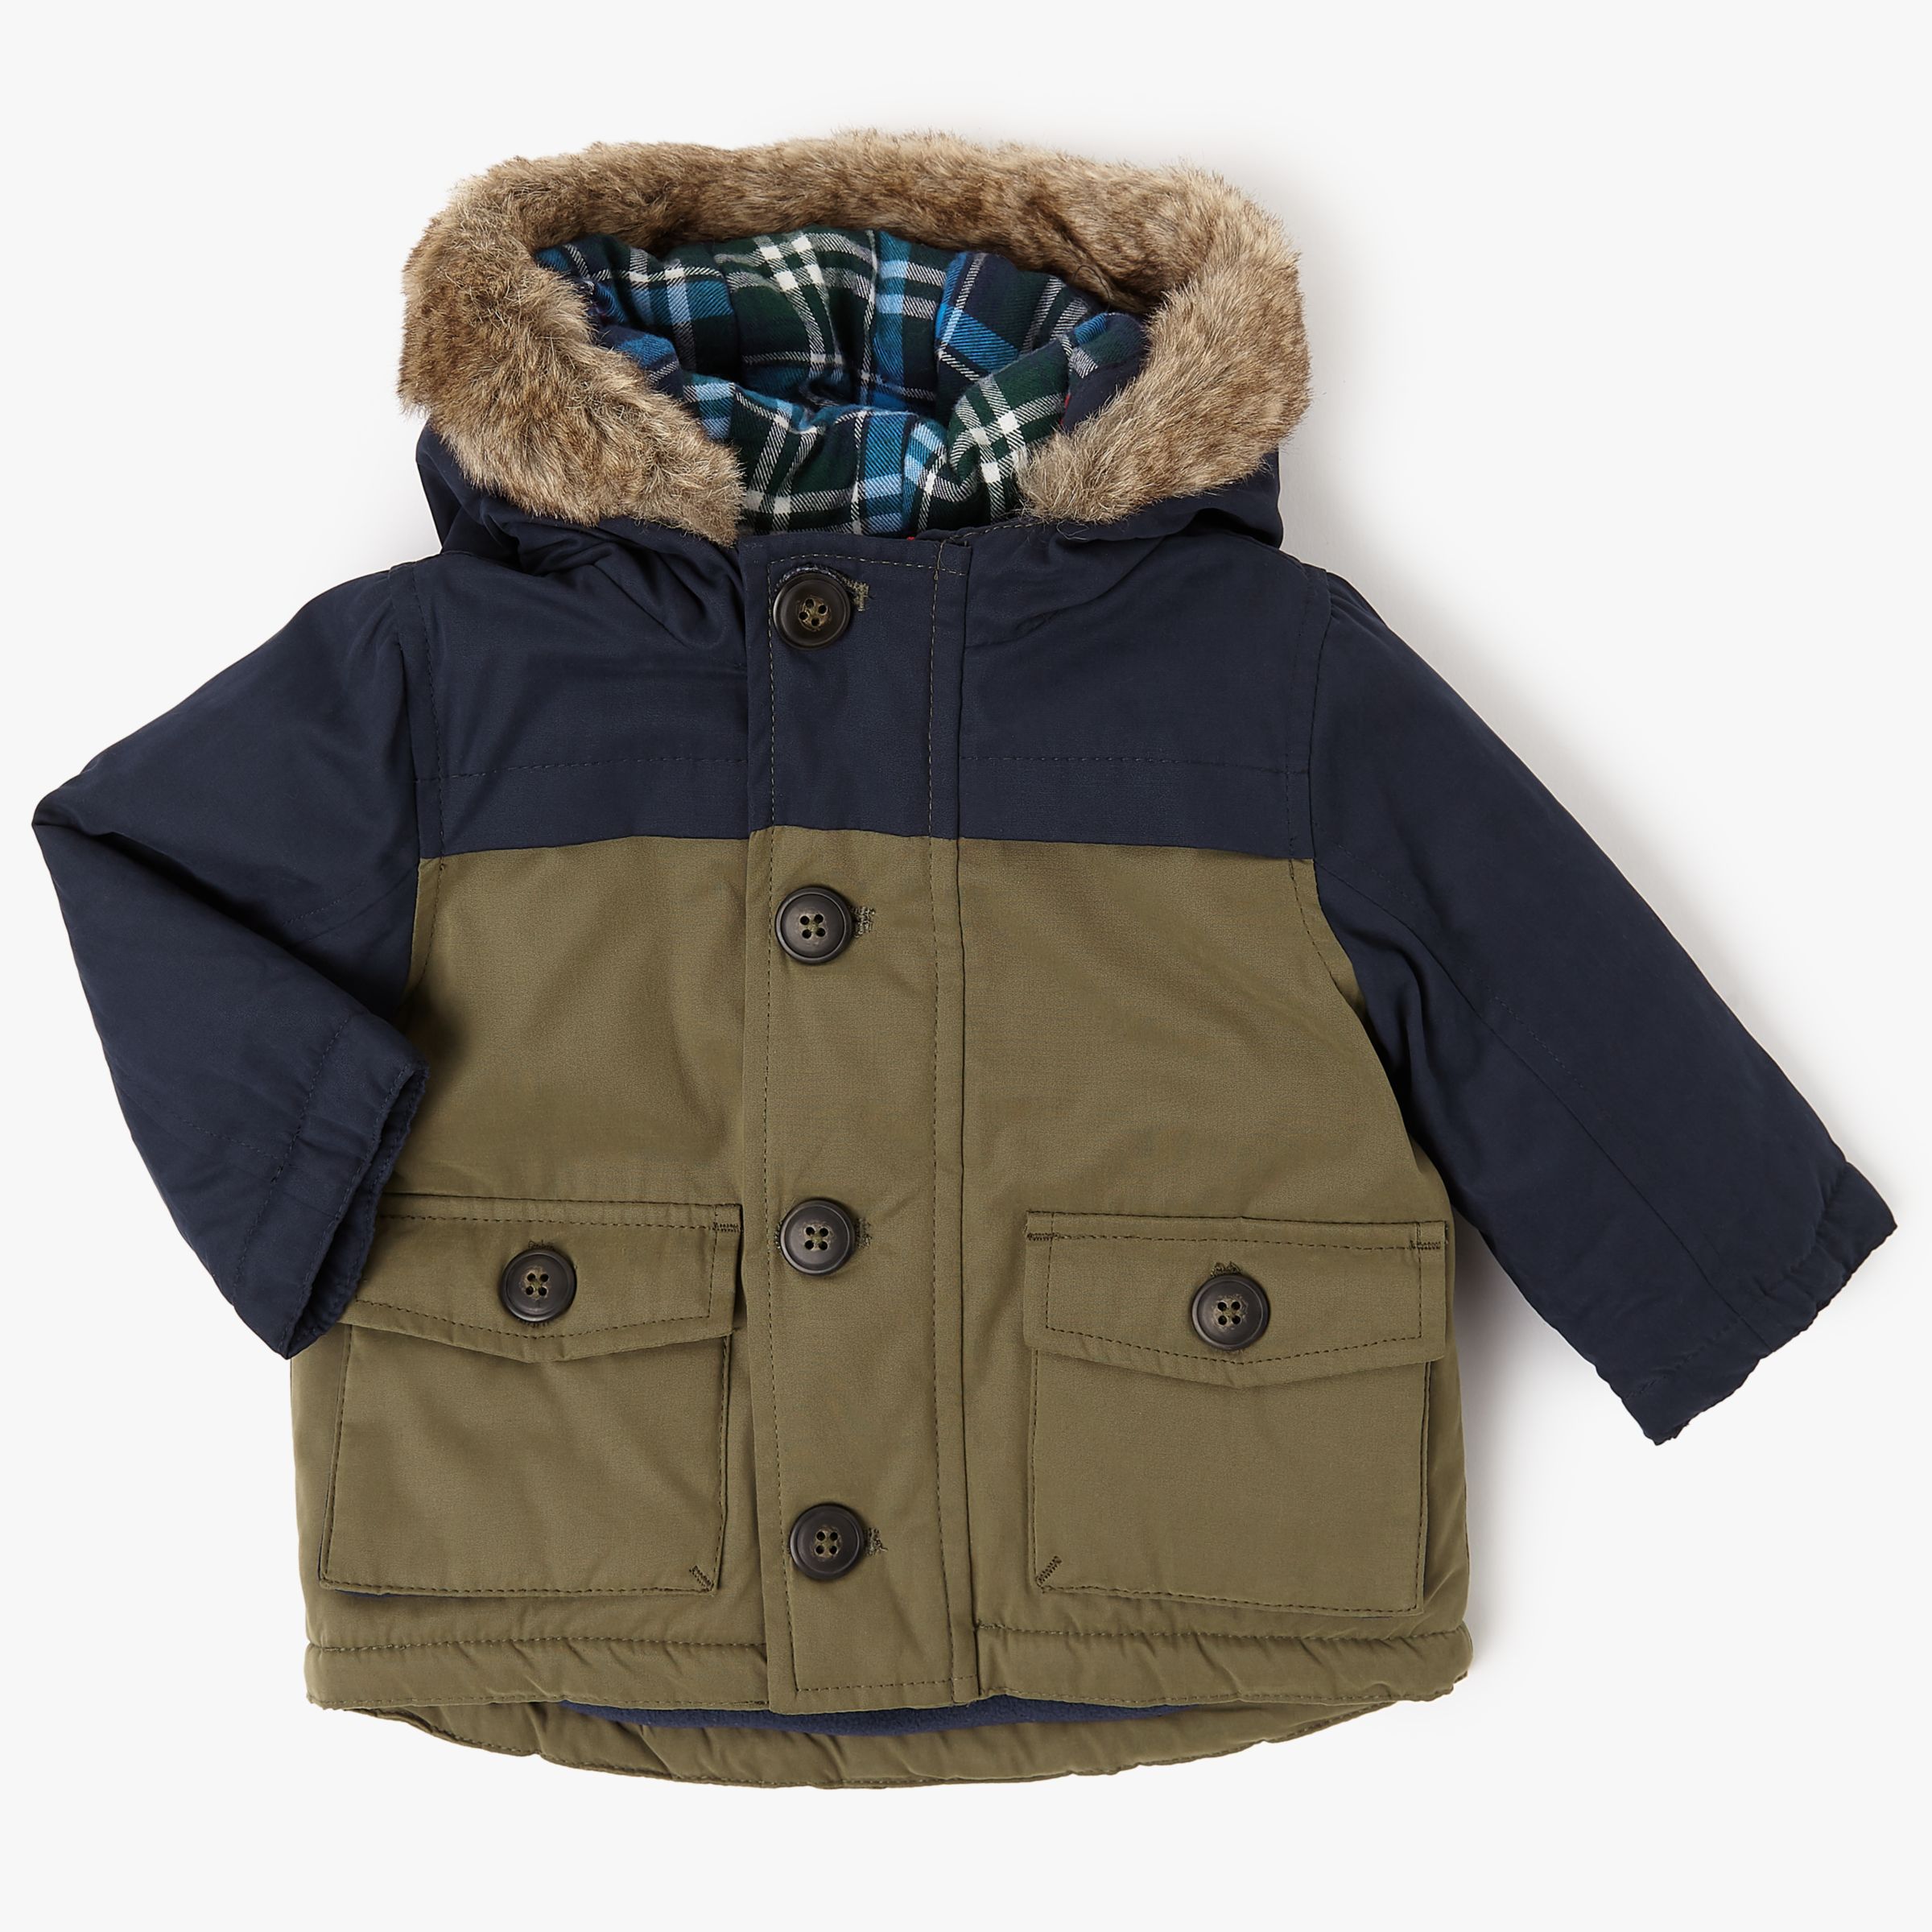 toddler jacket with fur hood